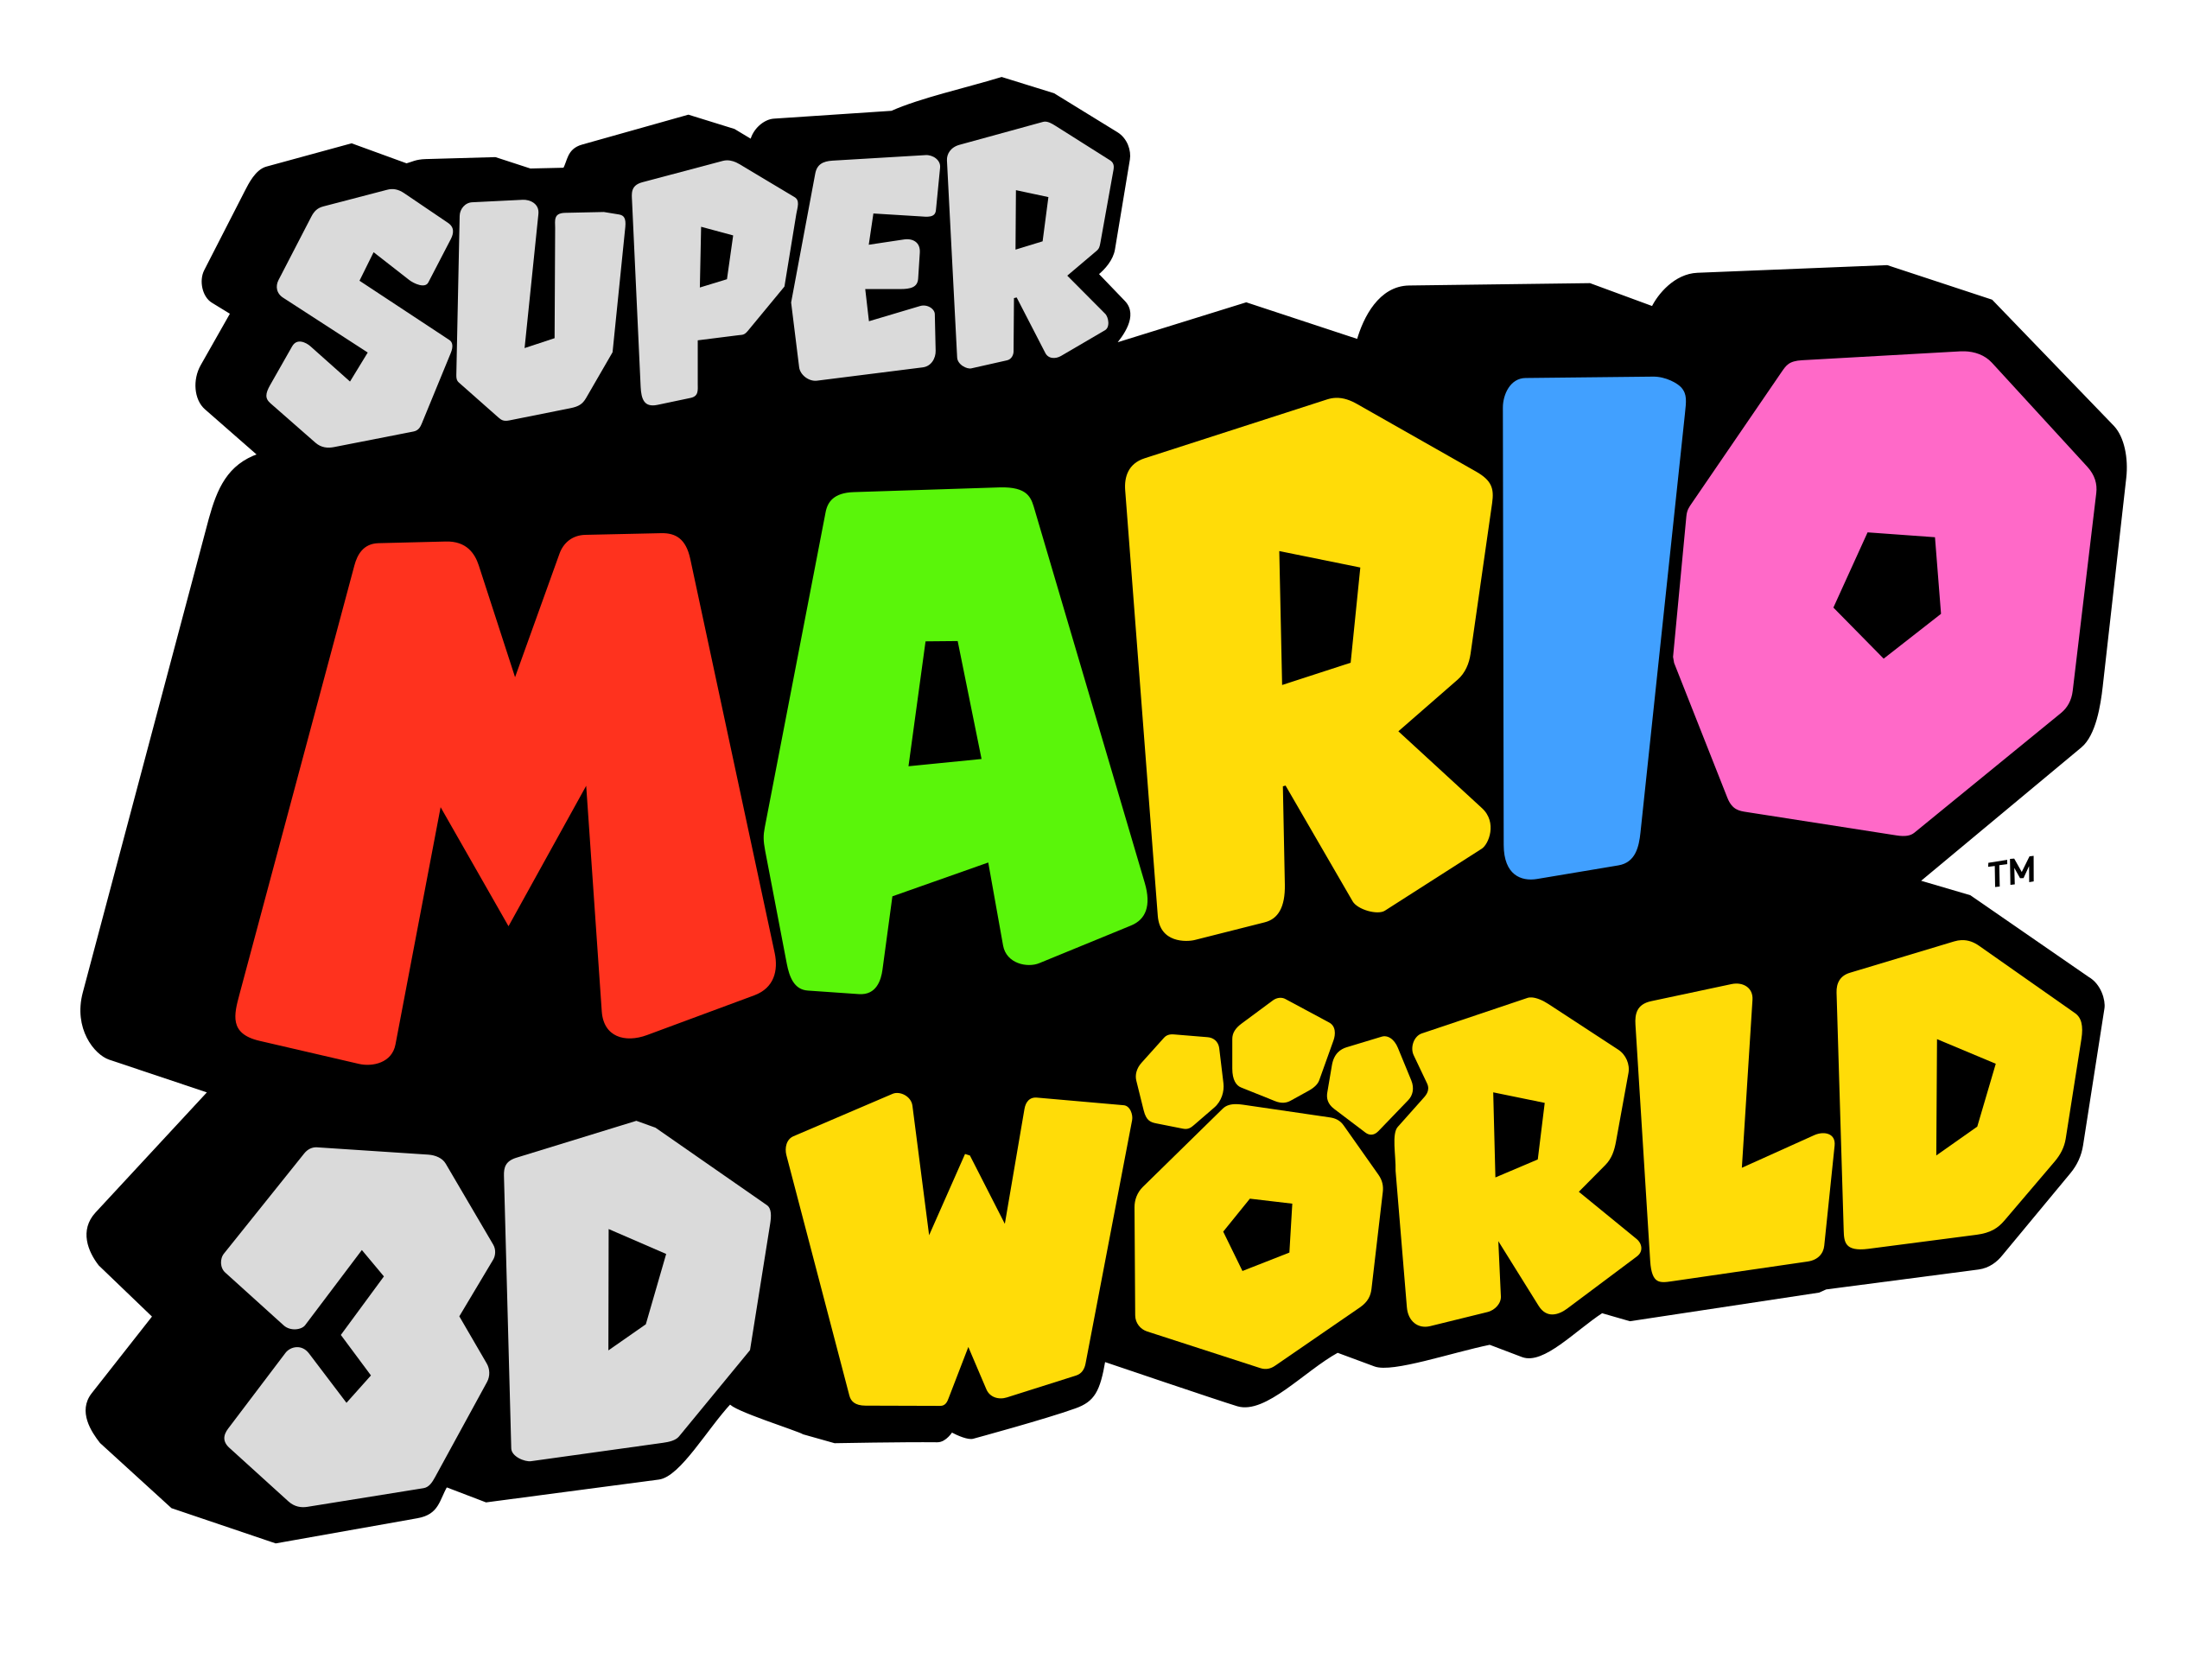 File:Mario emblem.svg - Wikipedia